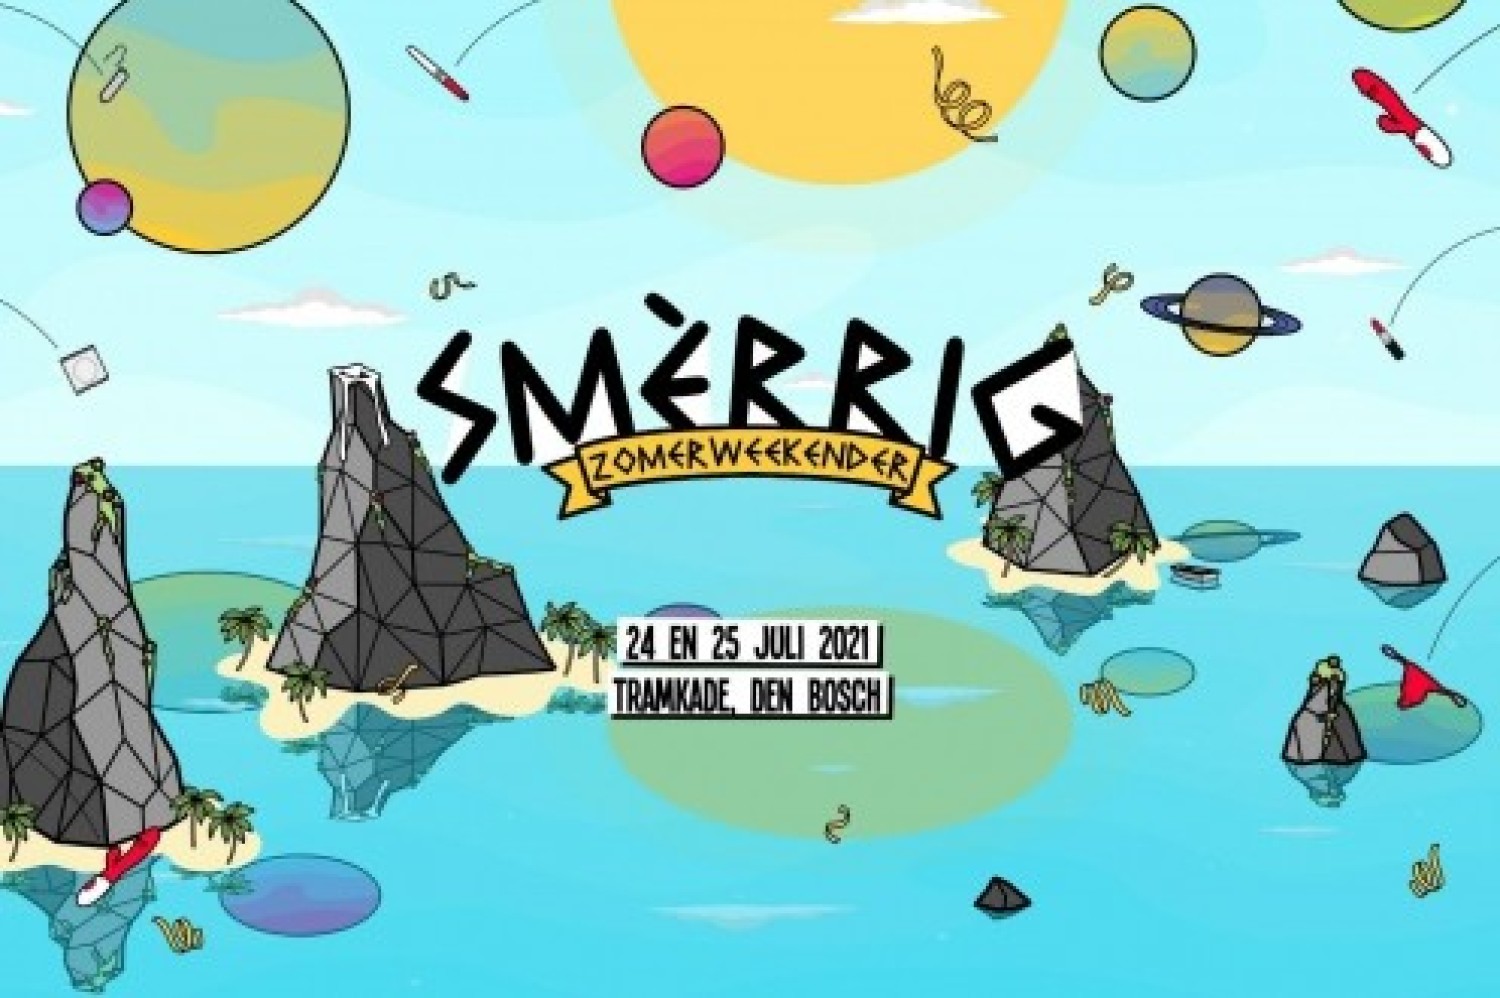 SMÈRRIG Zomerweekender Festival 2021